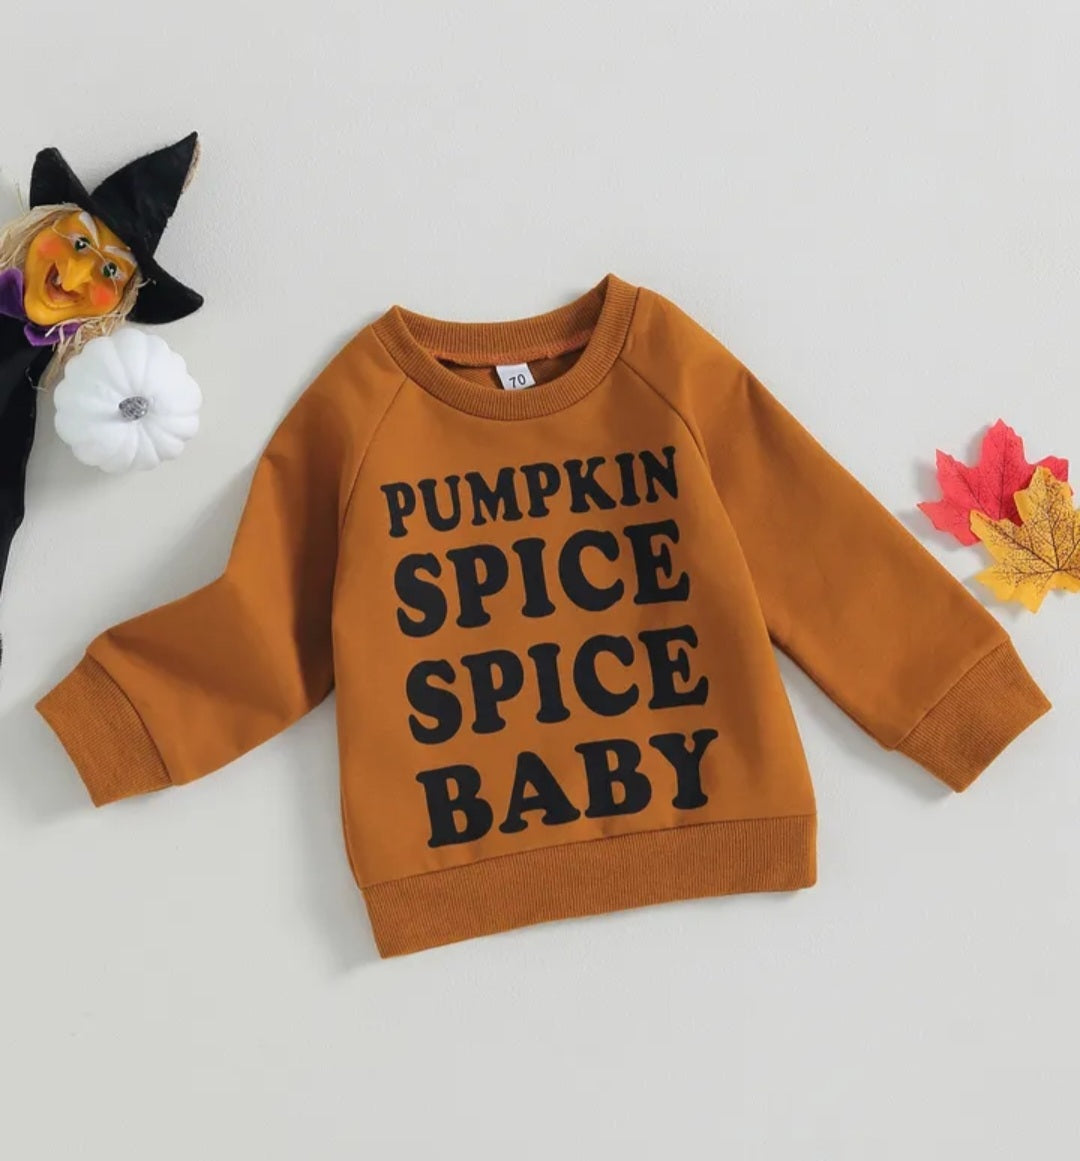 Pumpkin Spice Baby Long Sleeve Top (Gender Neutral)